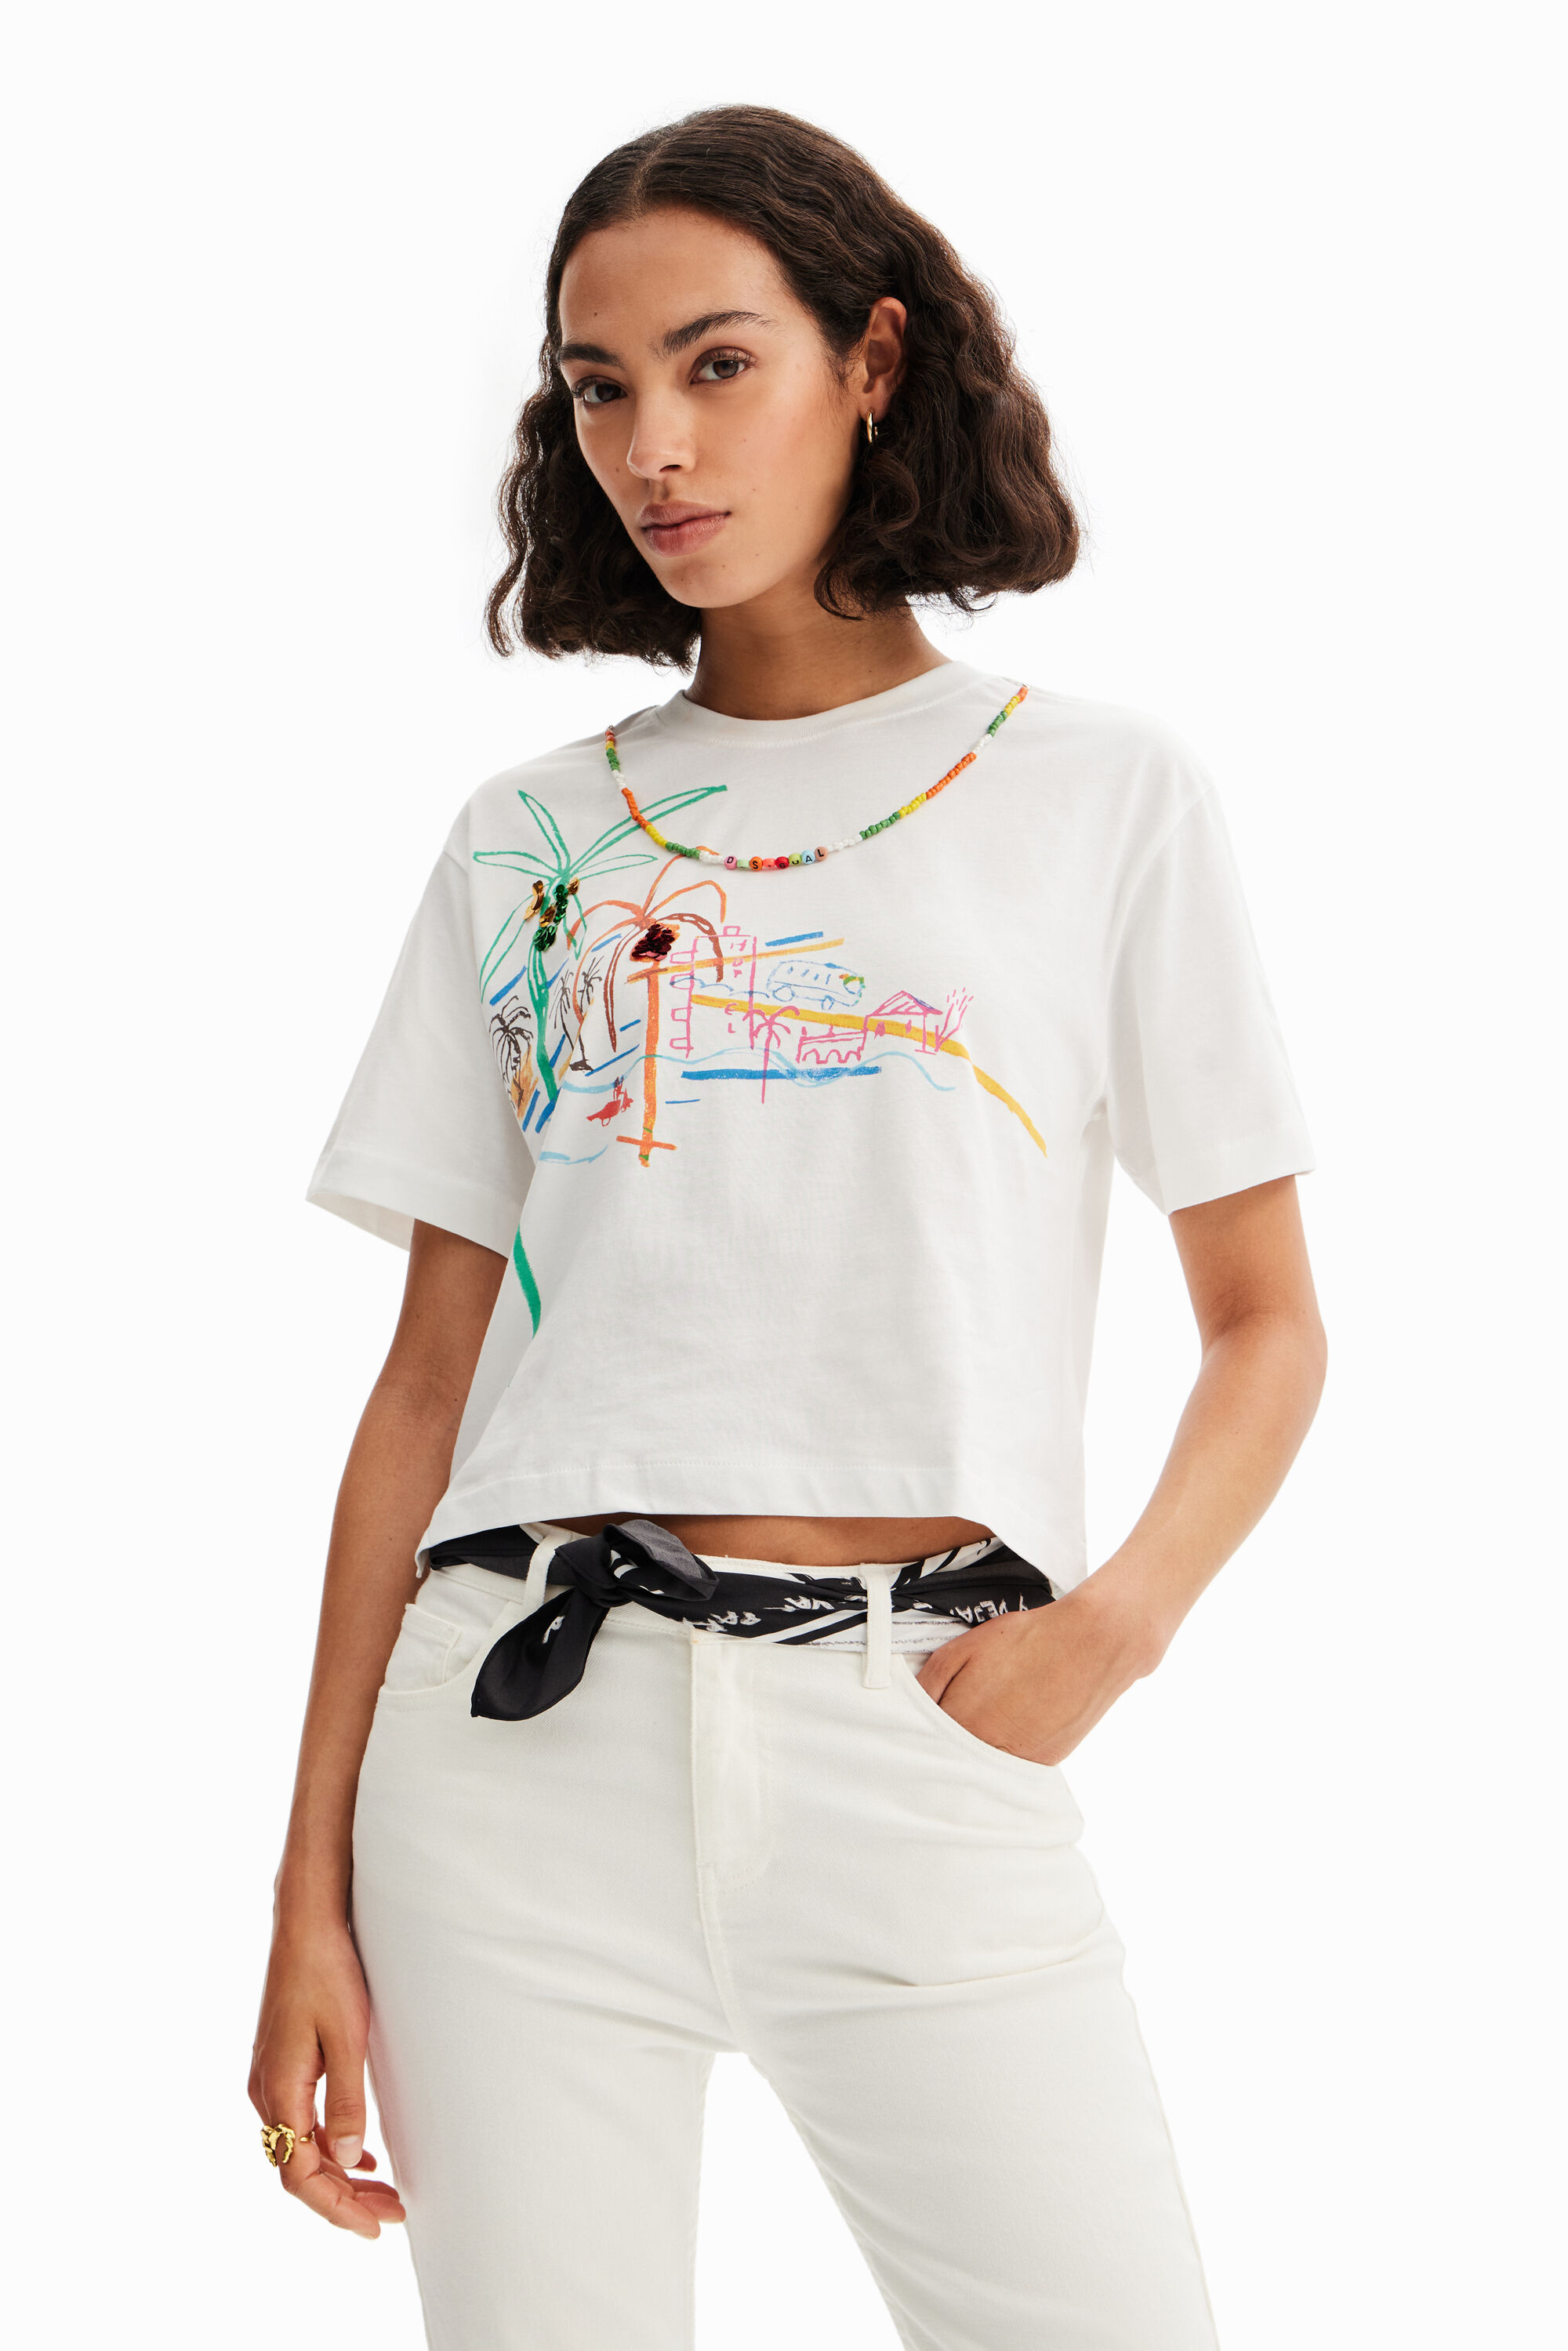 T-shirt illustration collier